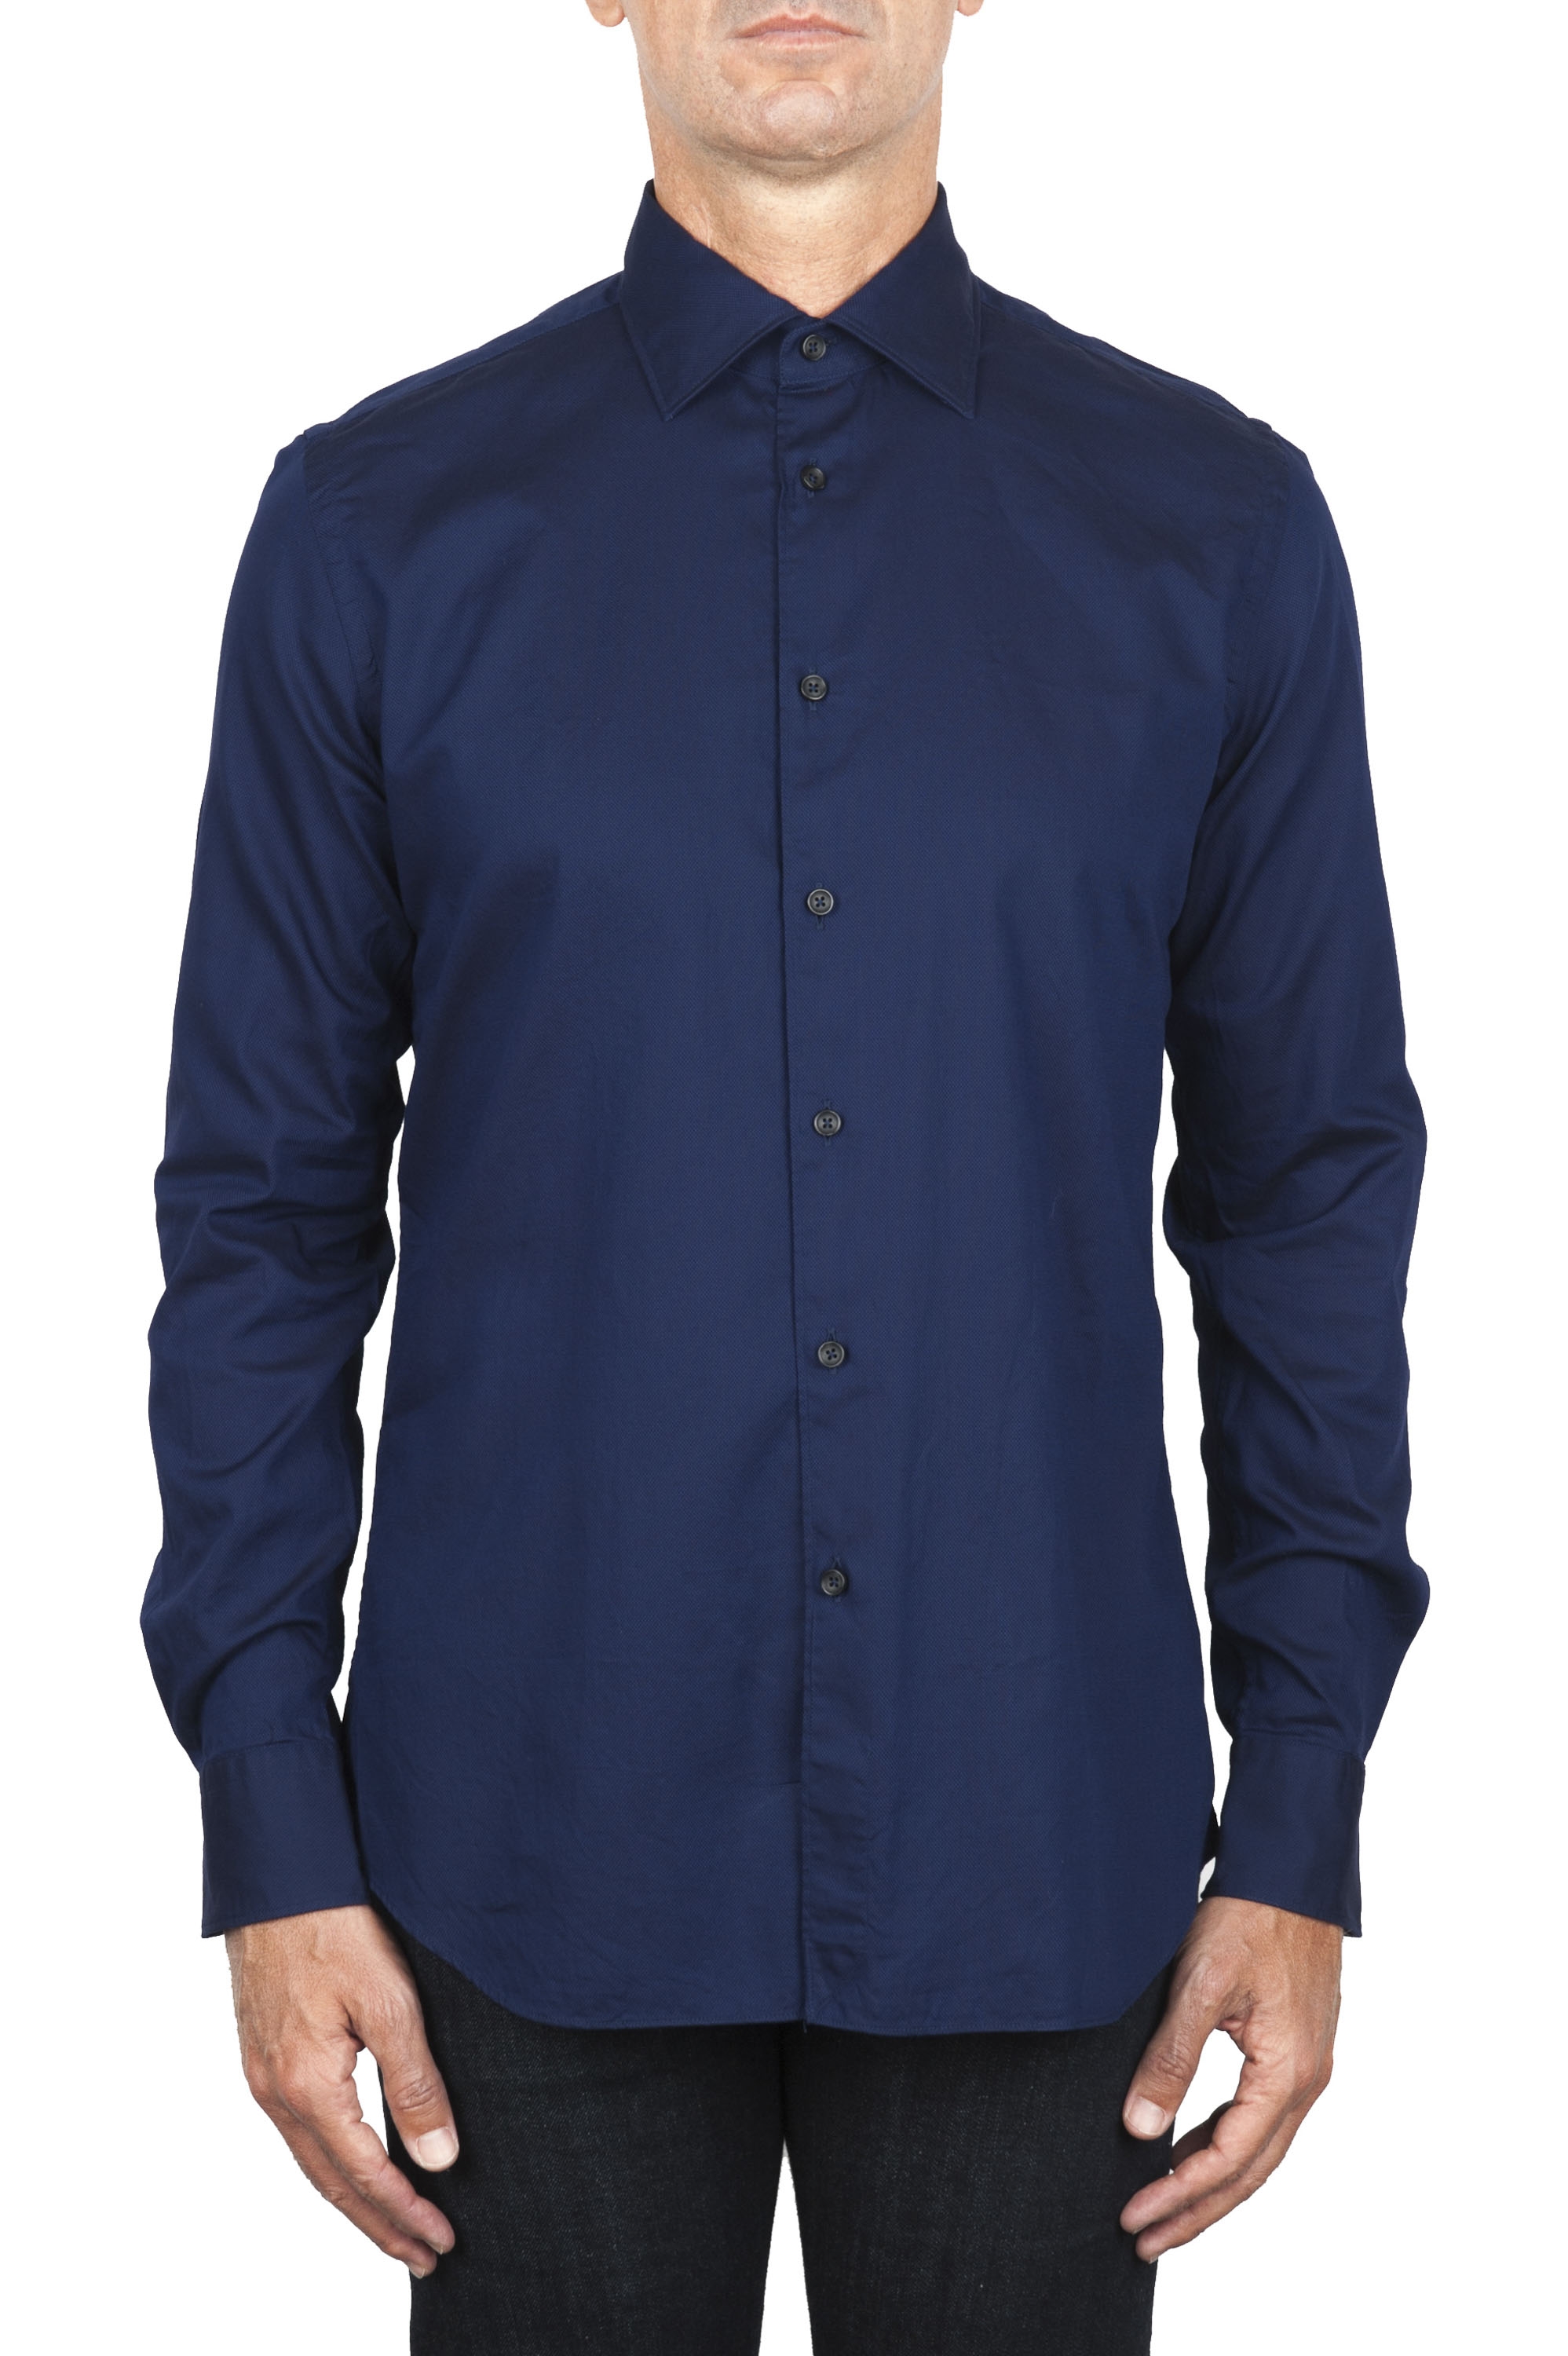 SBU 01829_19AW Camicia classica in cotone oxford navy blue 01